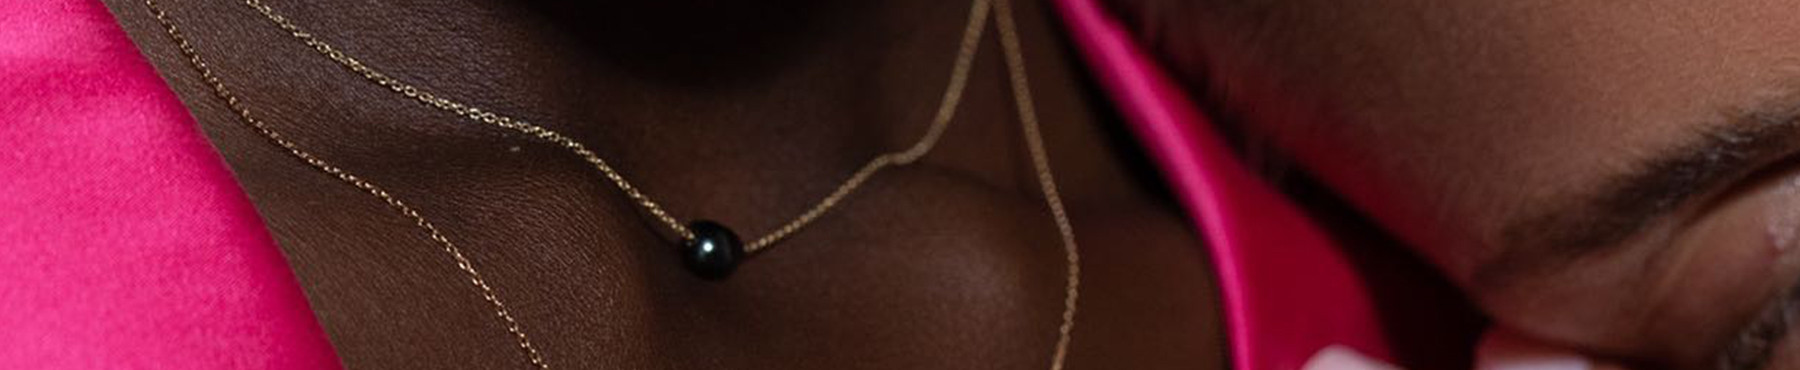 Claverin women's necklaces